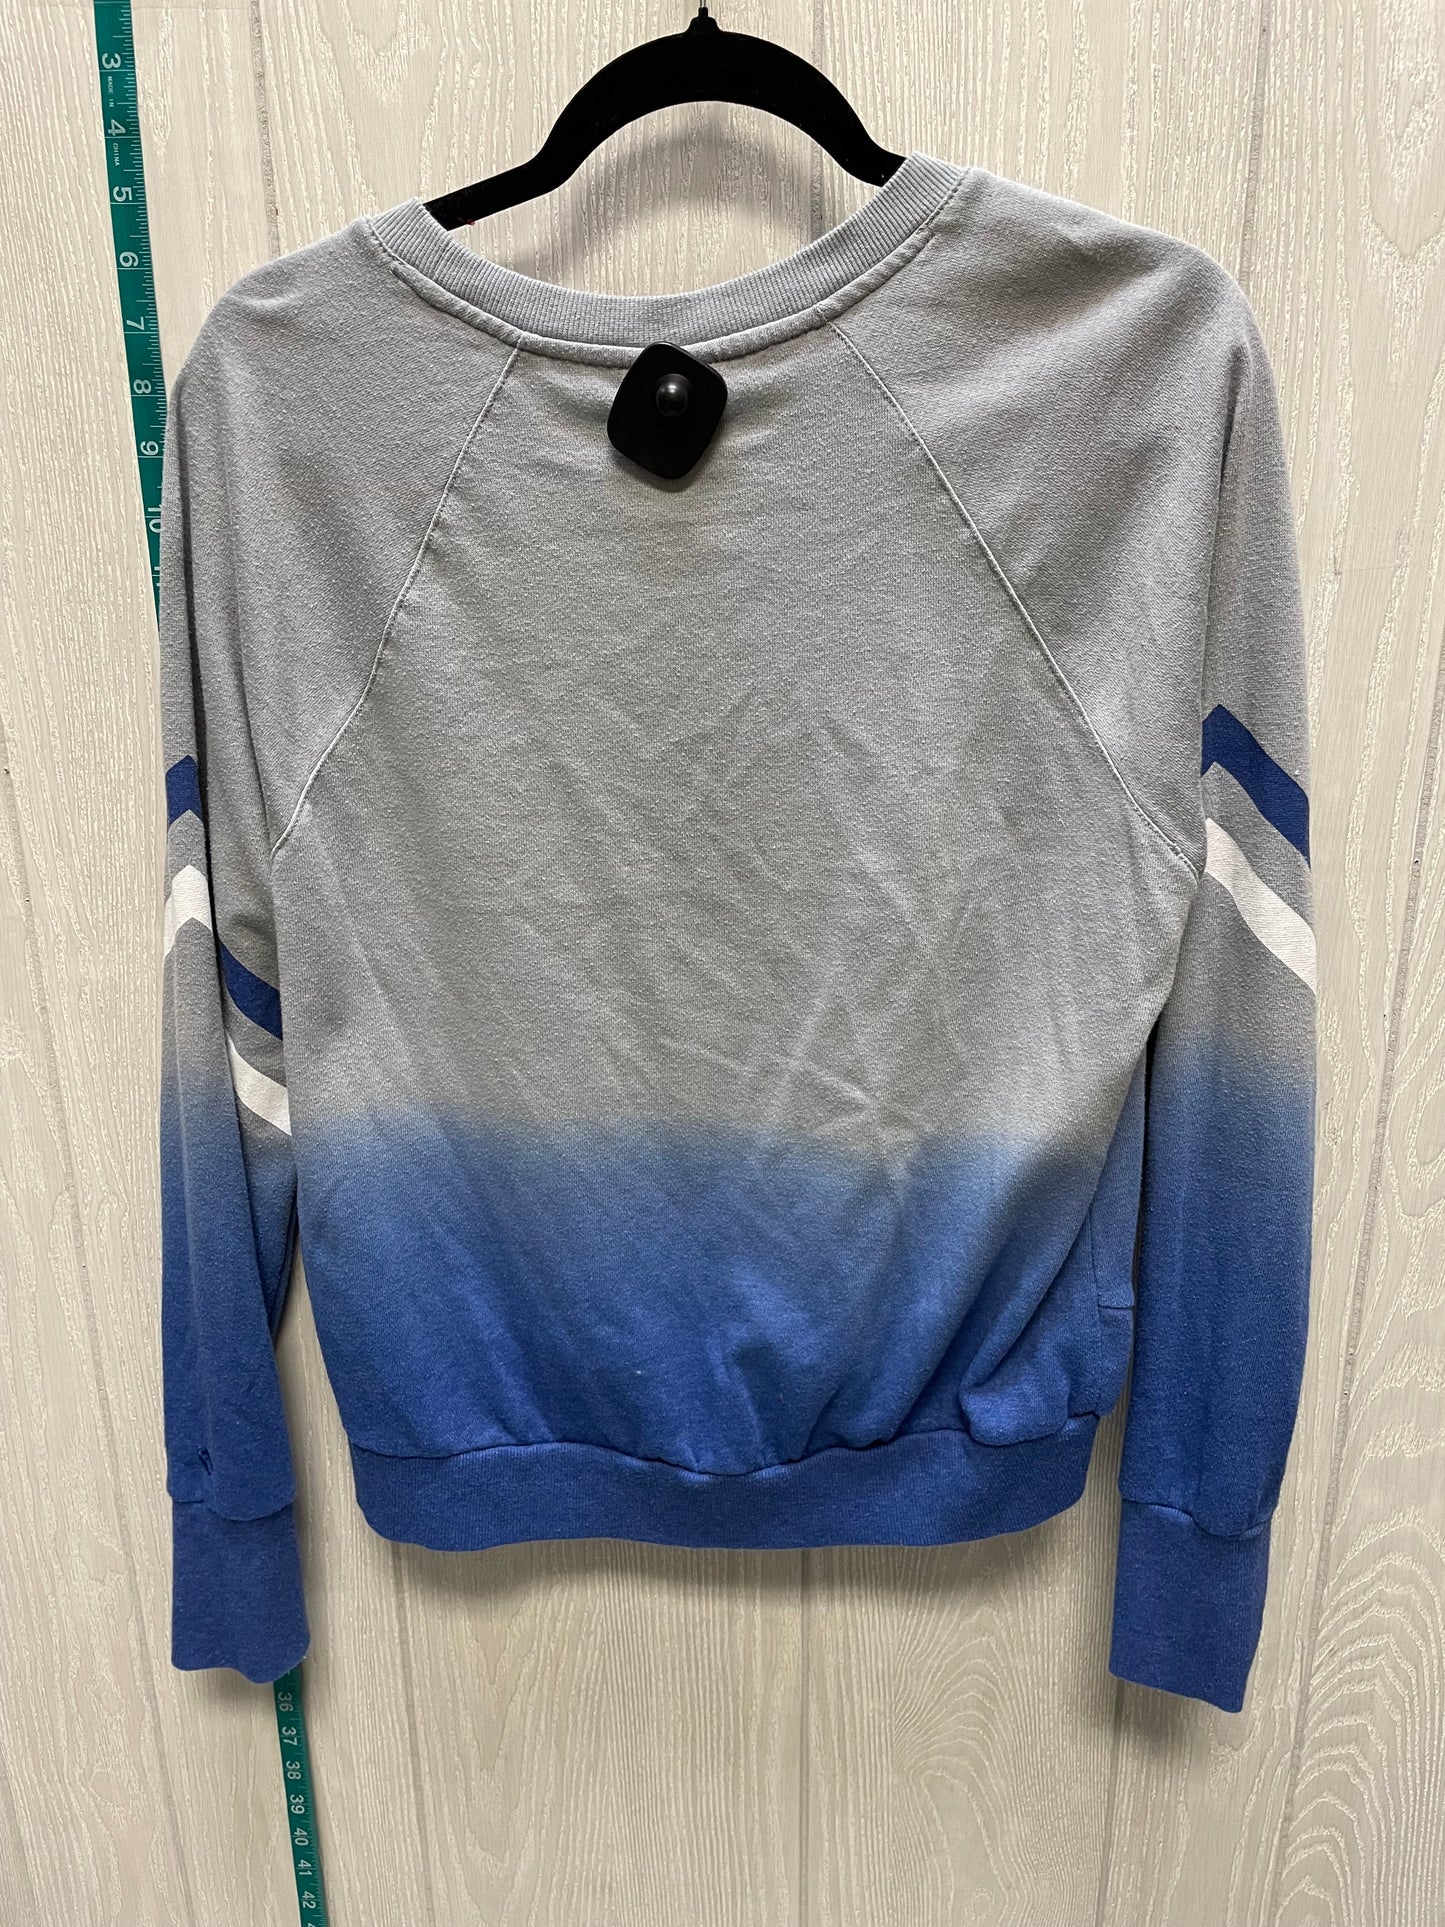 Blue & Grey Sweatshirt Crewneck Clothes Mentor, Size S